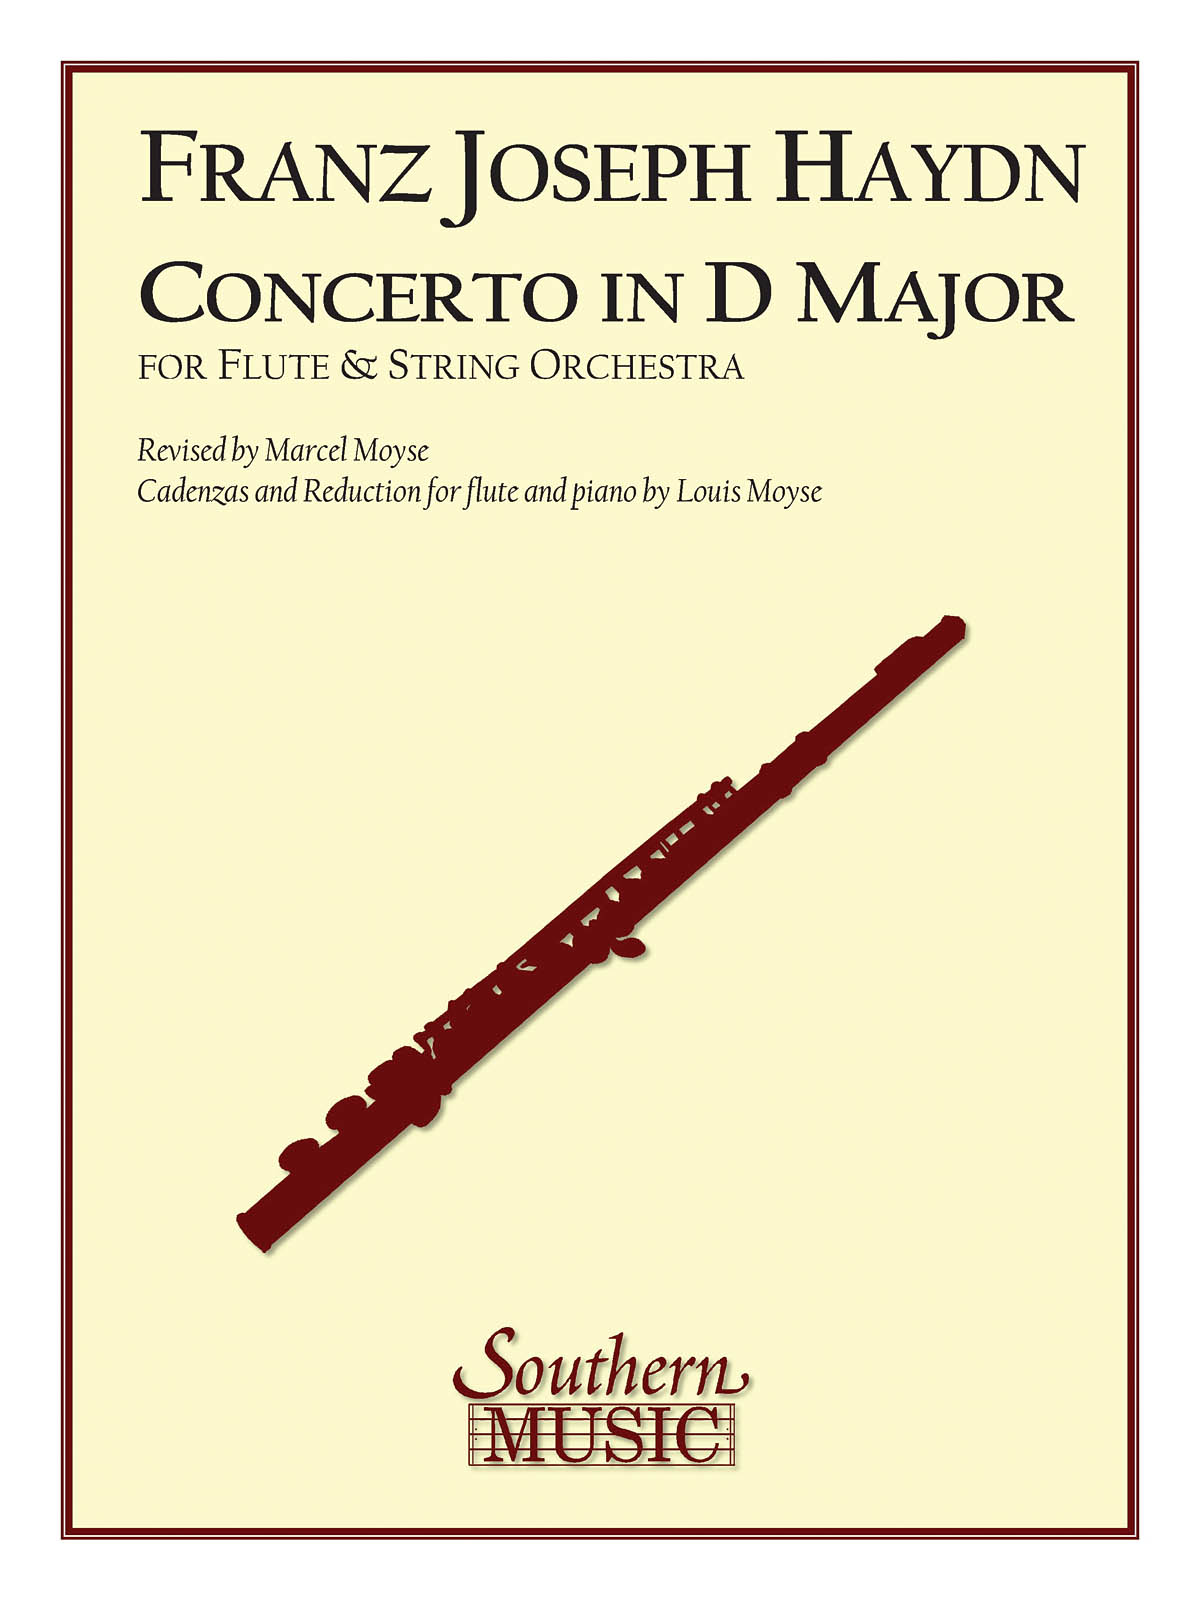 Franz Joseph Haydn: Concerto in D major